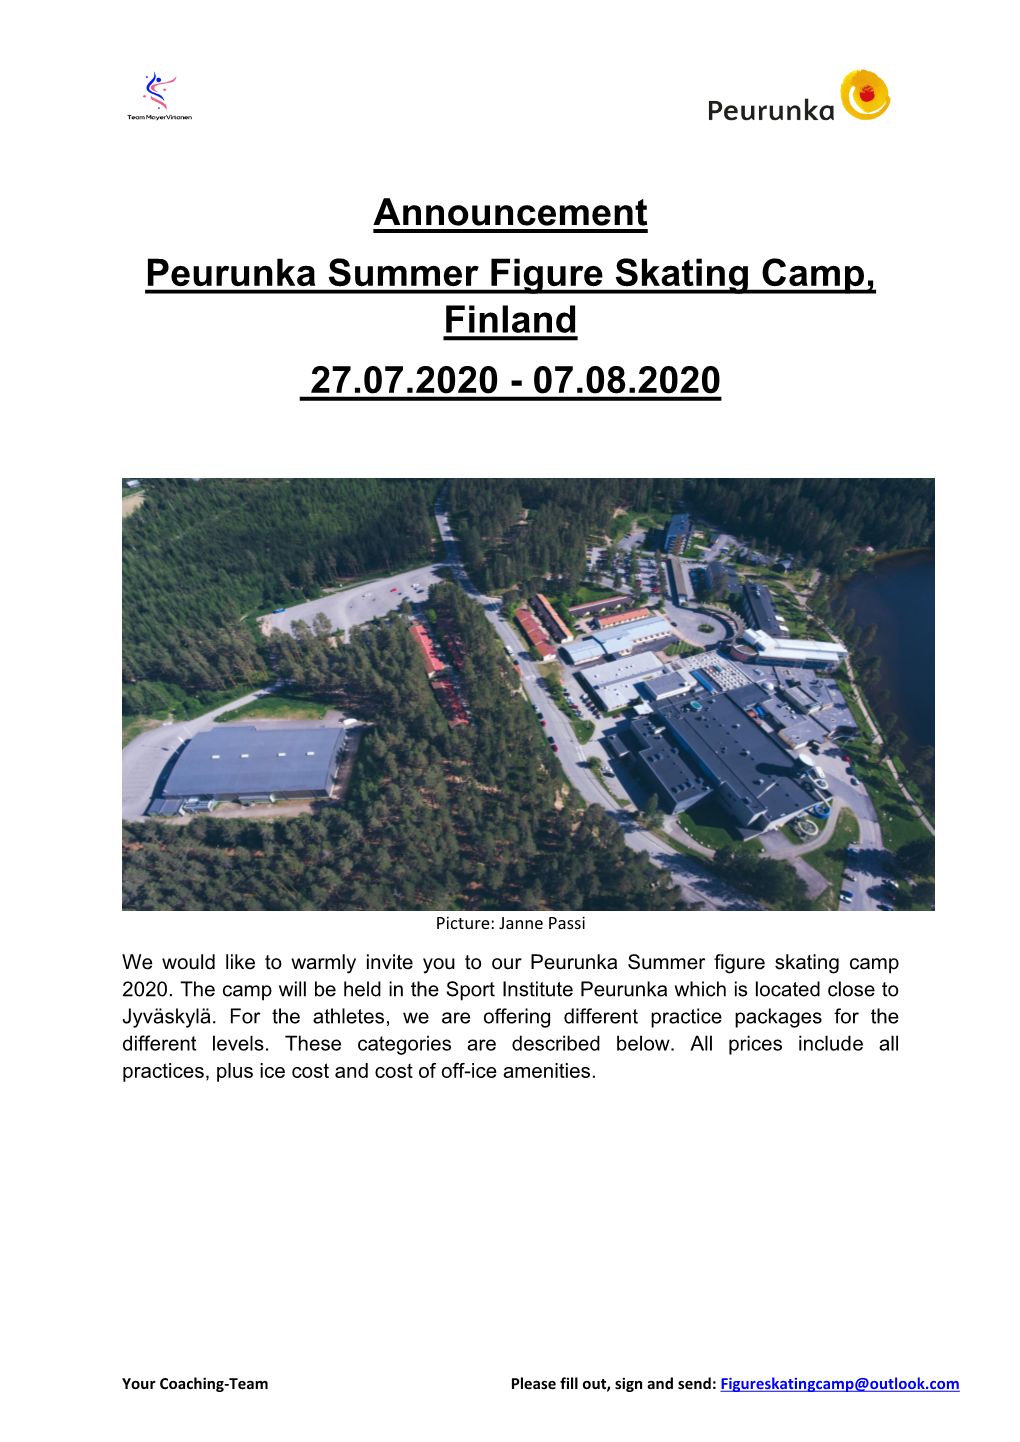 Announcement Peurunka Summer Figure Skating Camp, Finland 27.07.2020 - 07.08.2020